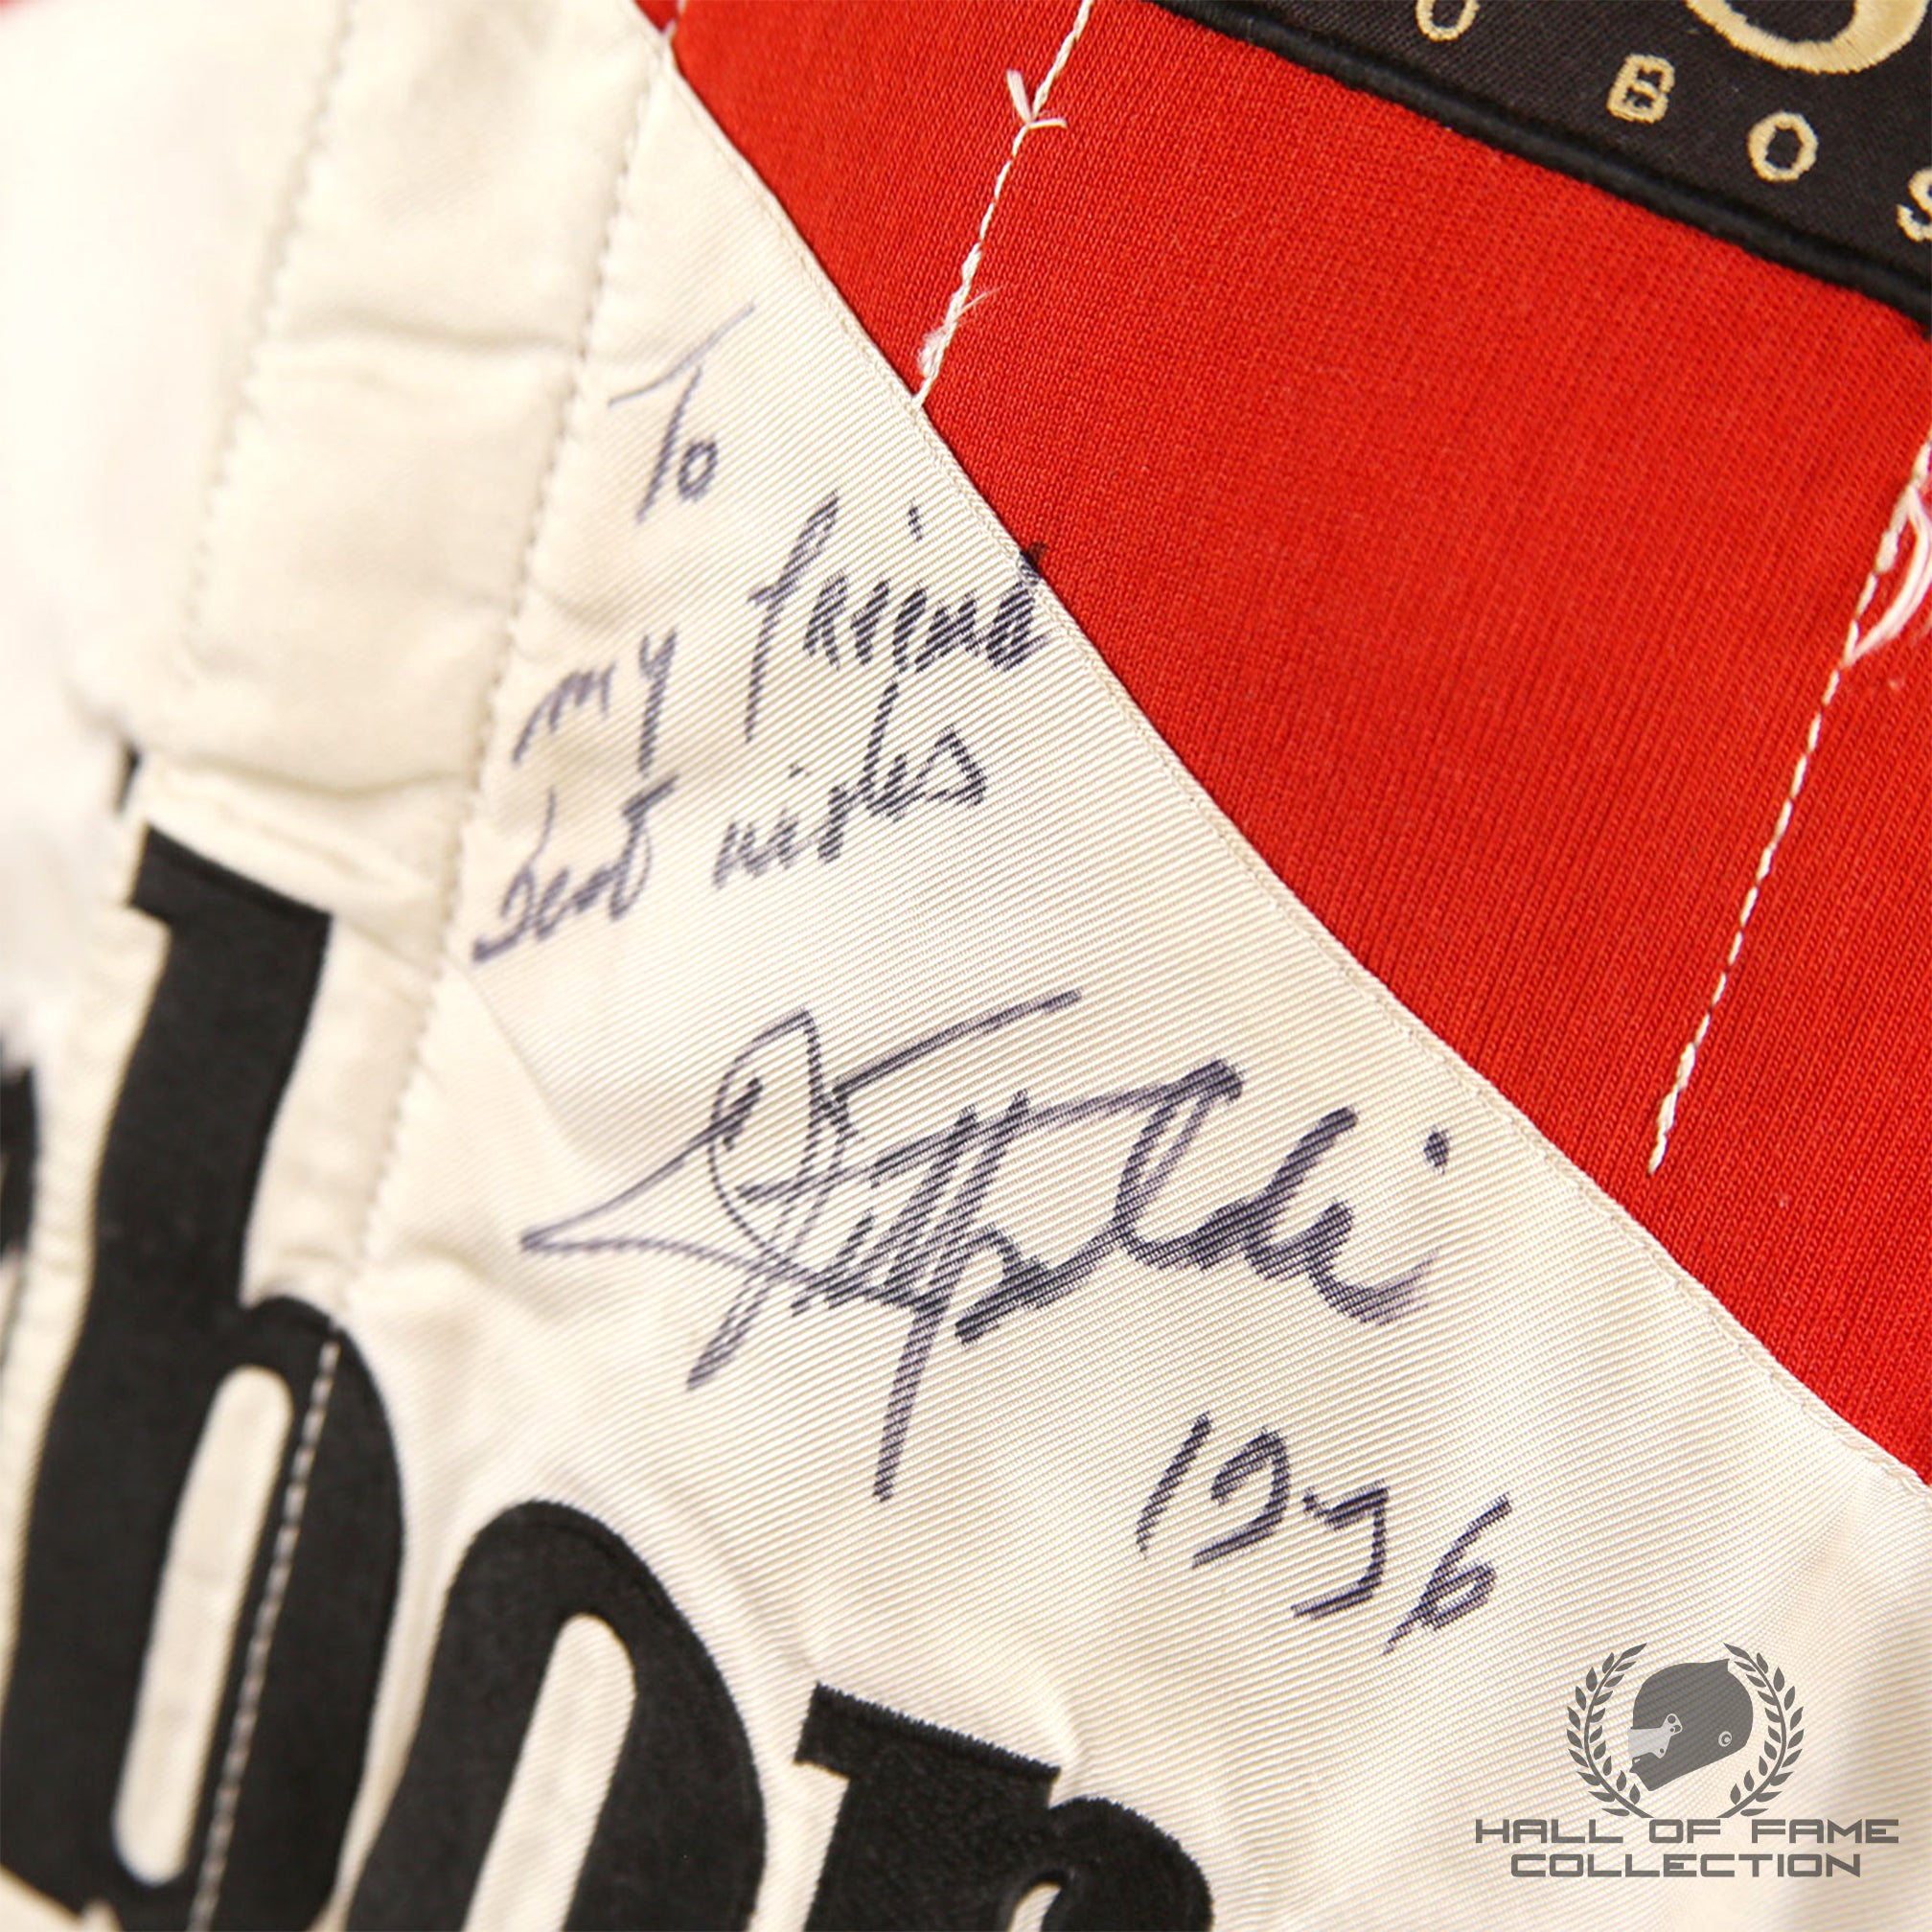 1994 Emerson Fittipaldi Signed Race Used Team Penske IndyCar Suit